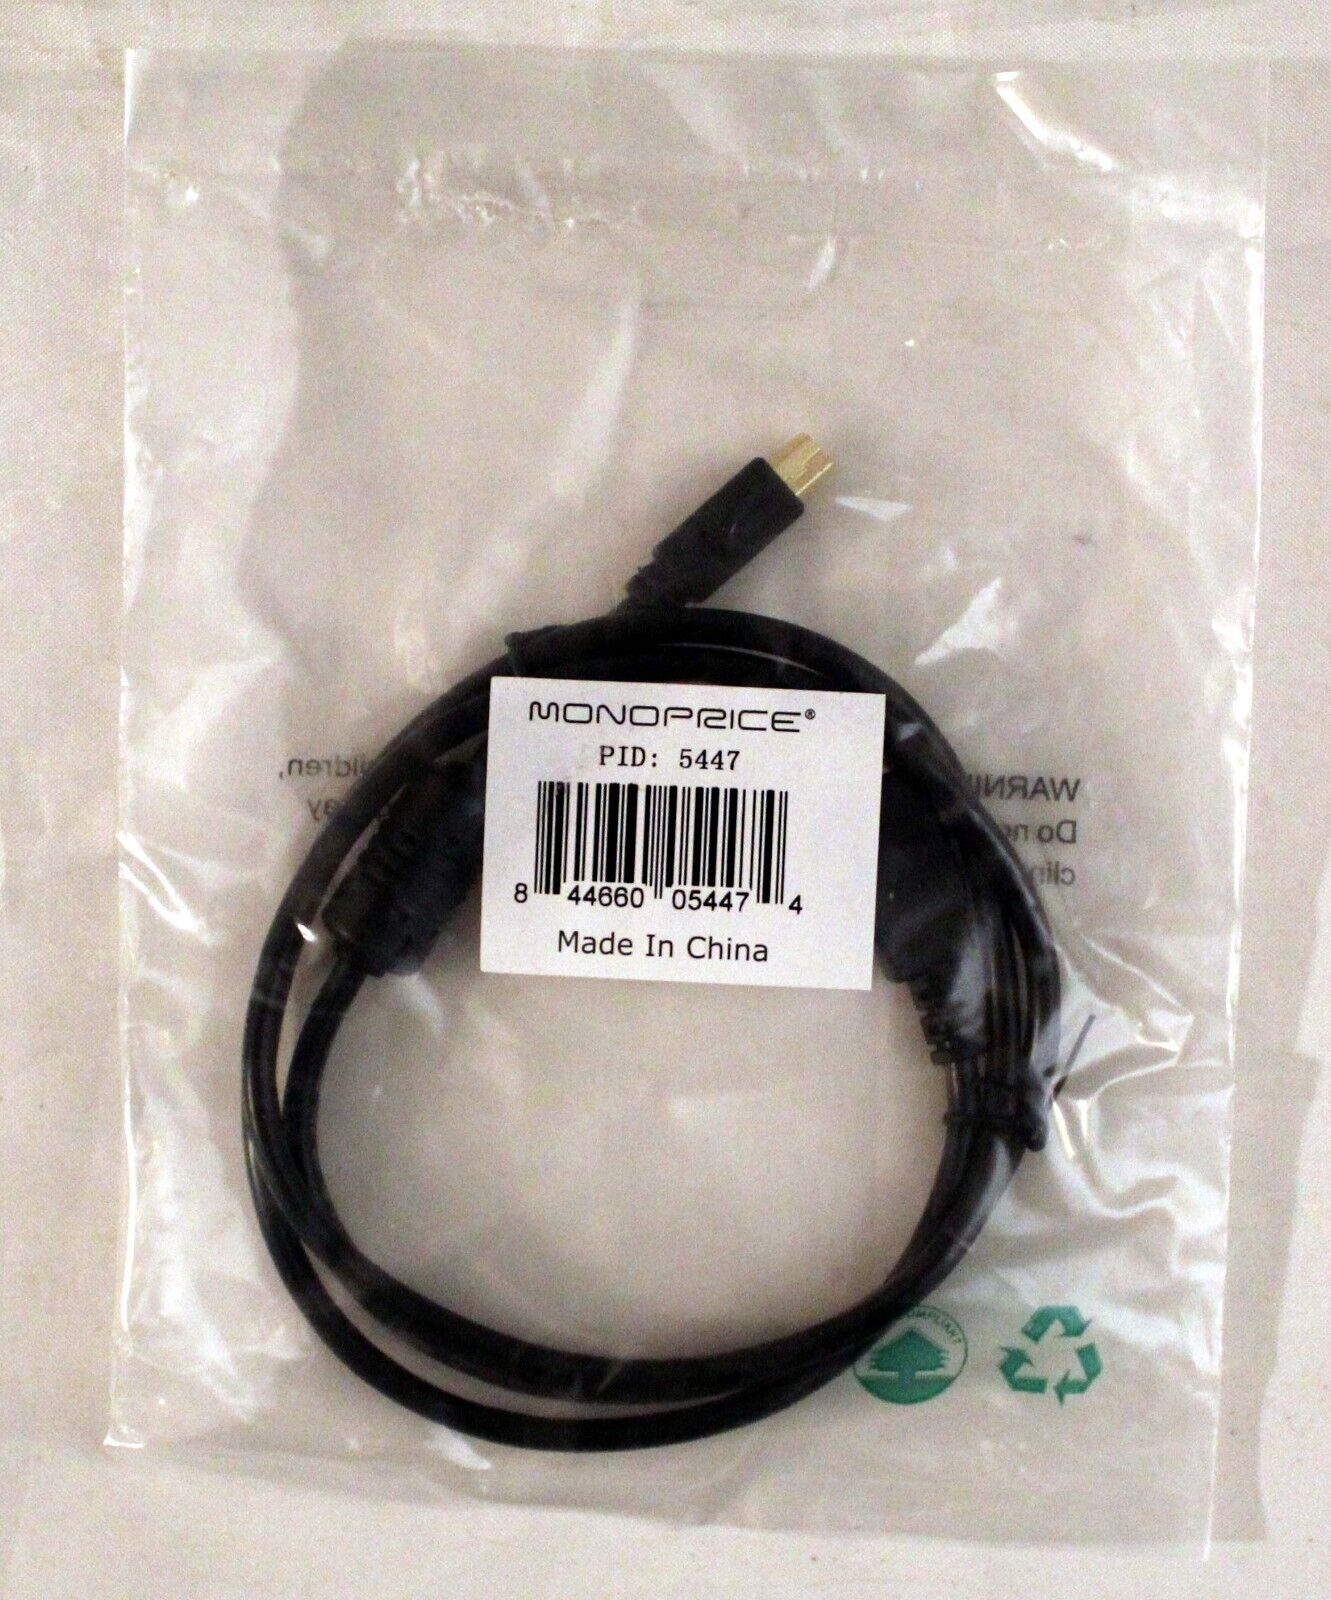 Monoprice PID: 5447 USB Cable Black Nice LOOK